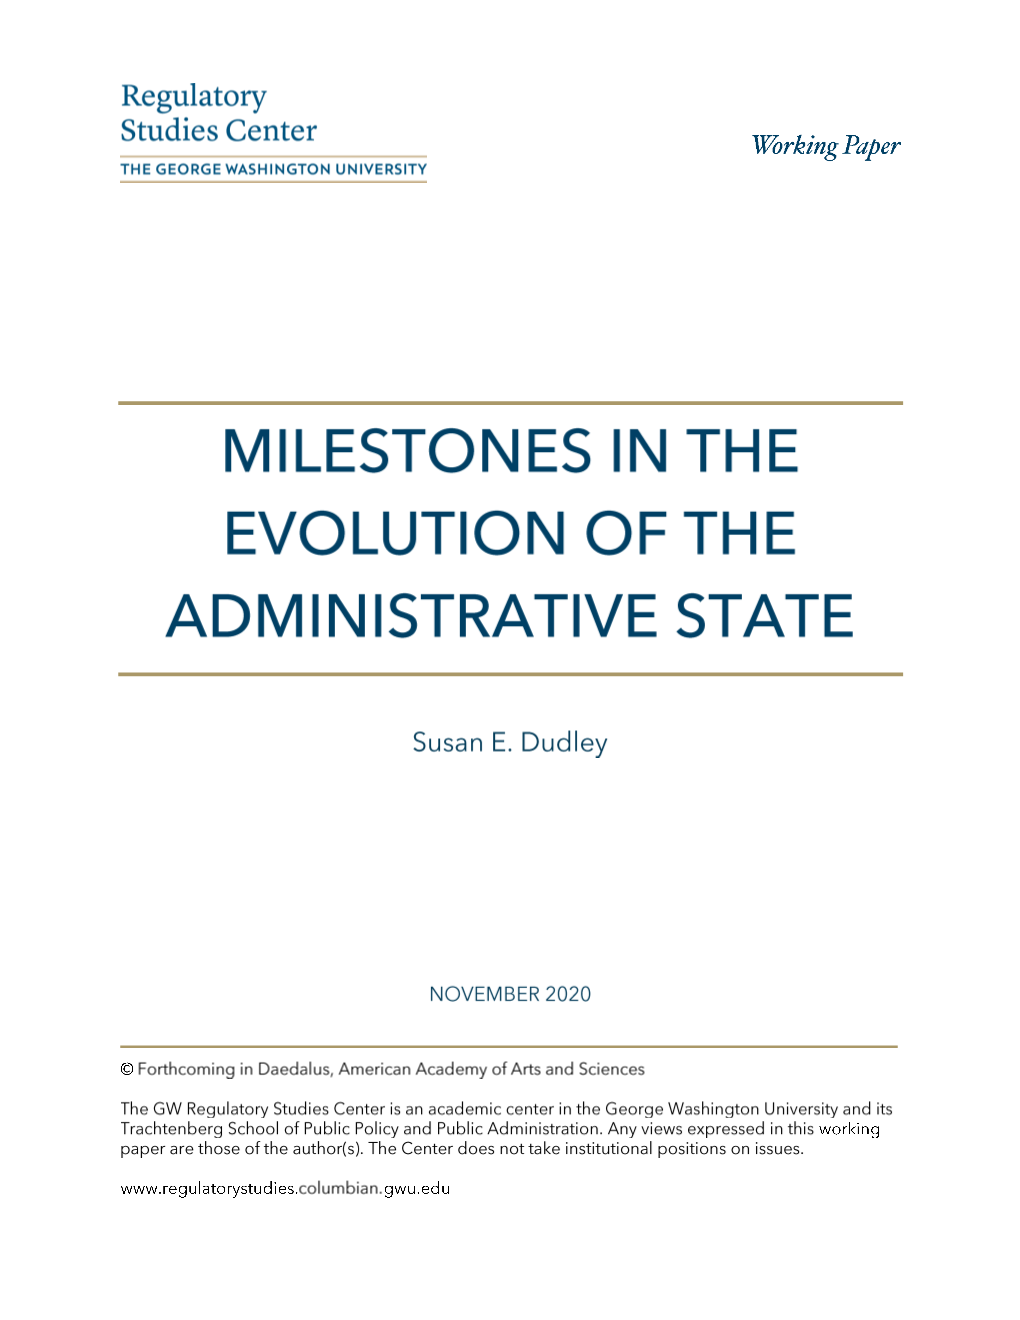 Milestones in the Evolution of the Administrative State.” GW Regulatory Studies Center, November 2020